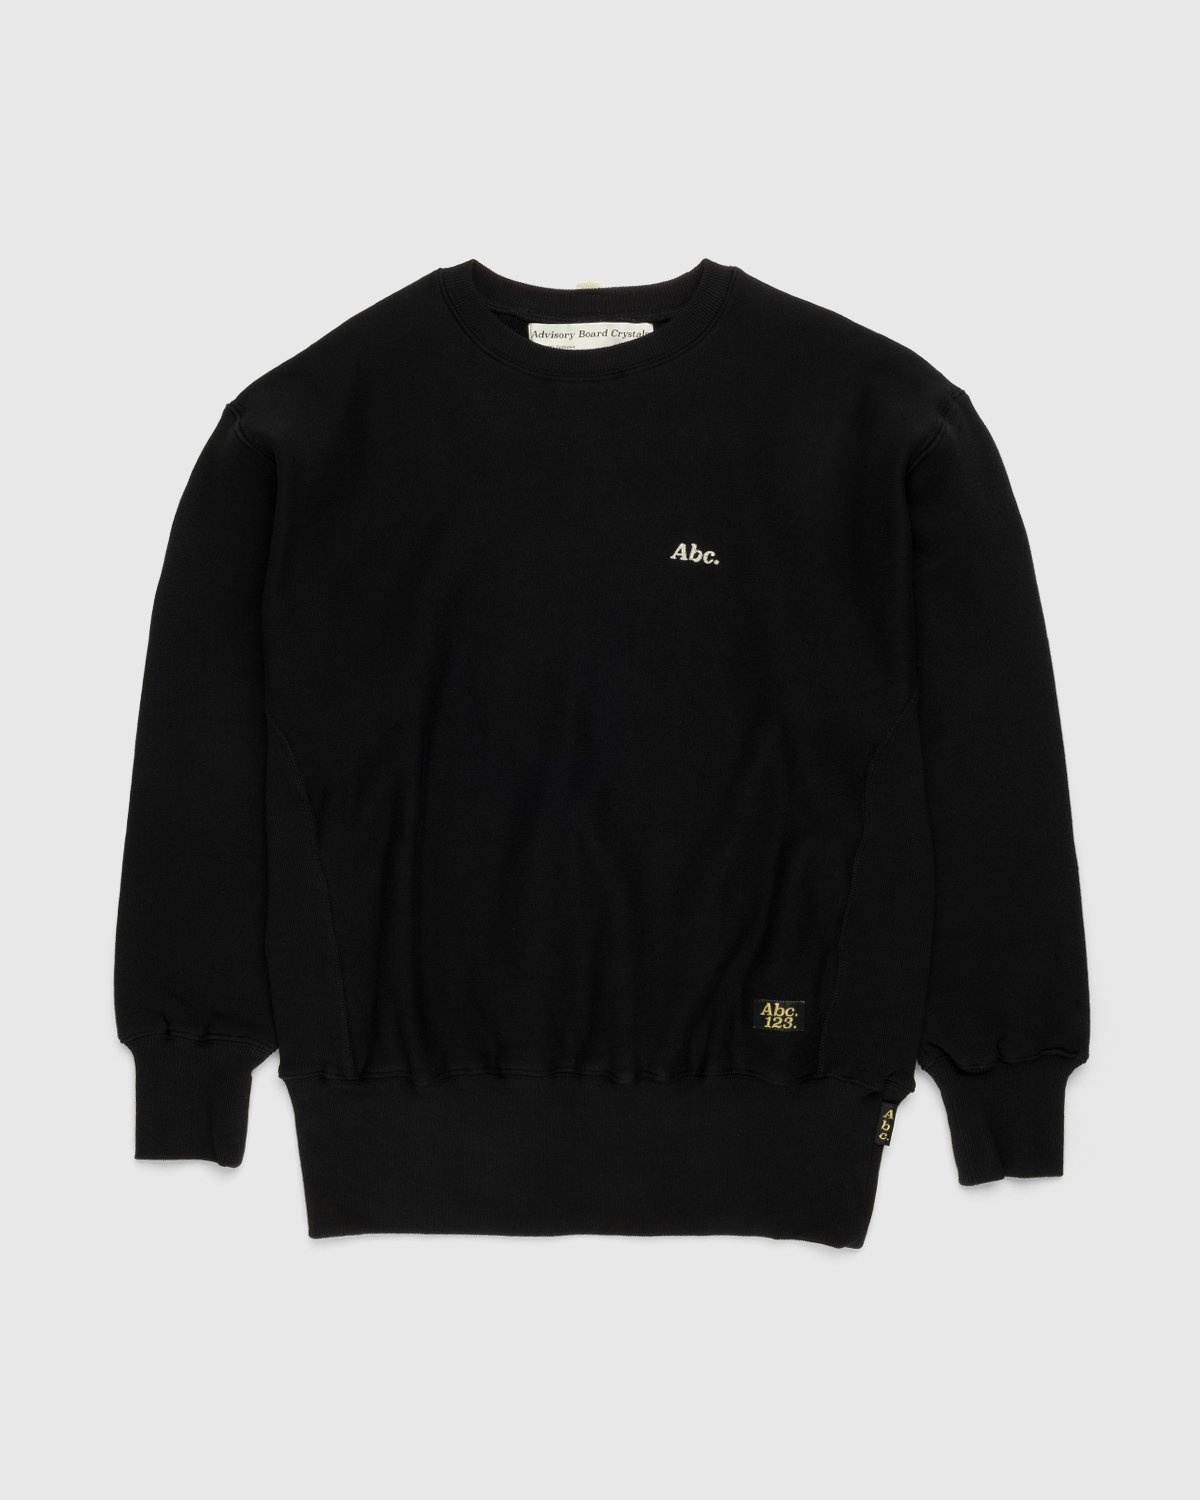 Abc. – French Terry Crewneck Sweatshirt Anthracite - Sweatshirts - Black - Image 1